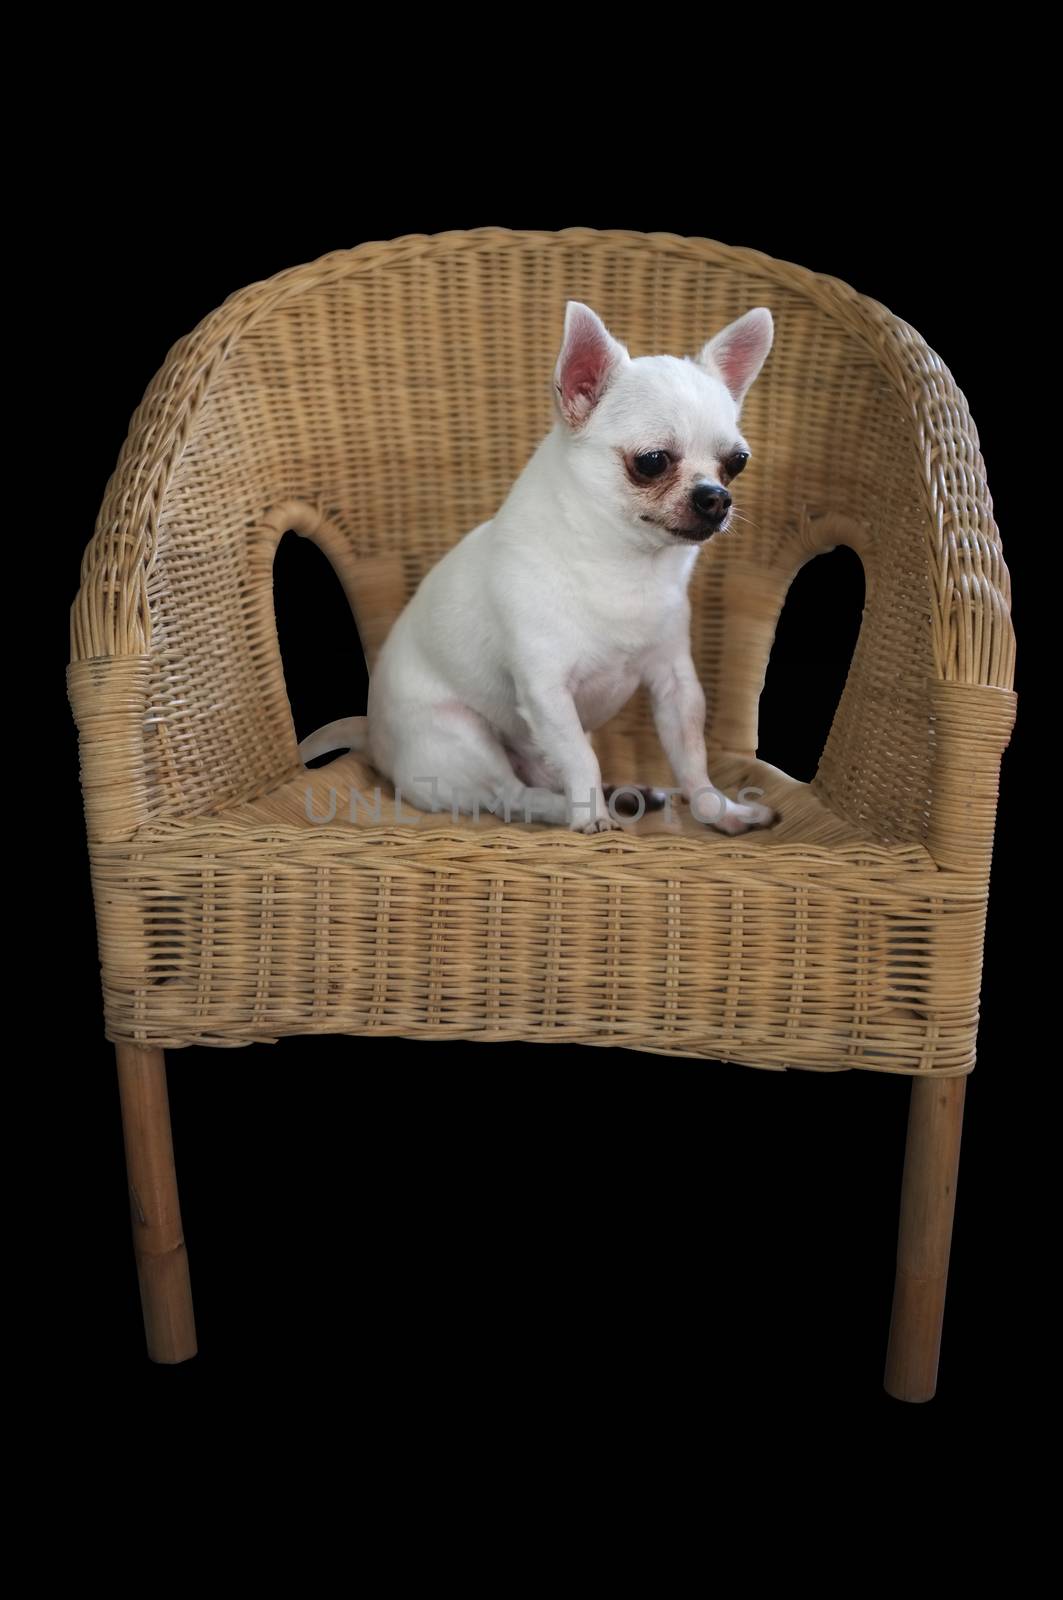 Dog chihuahua sitting on weaving rattan chair